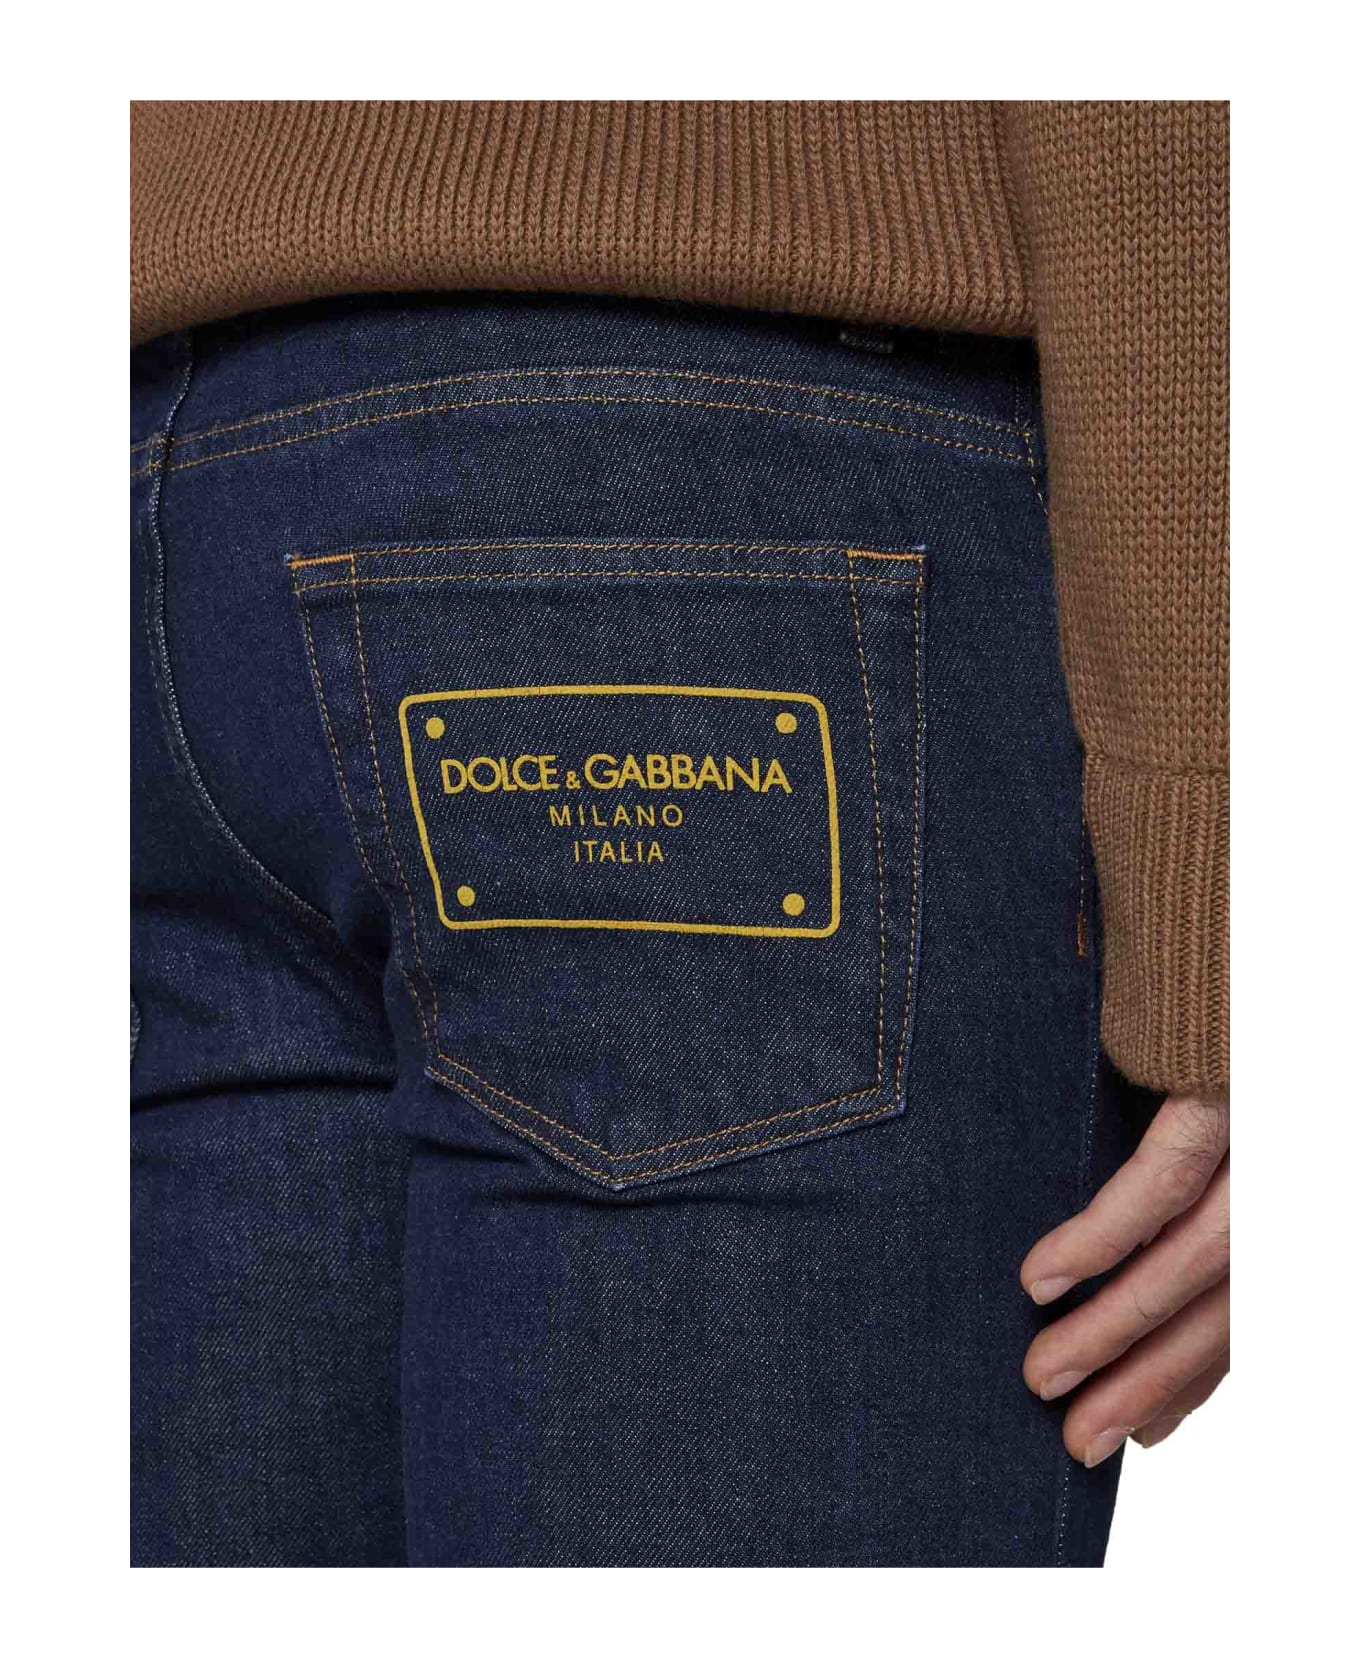 Dolce & Gabbana Skinny Fit Trouser - Variante abbinata デニム